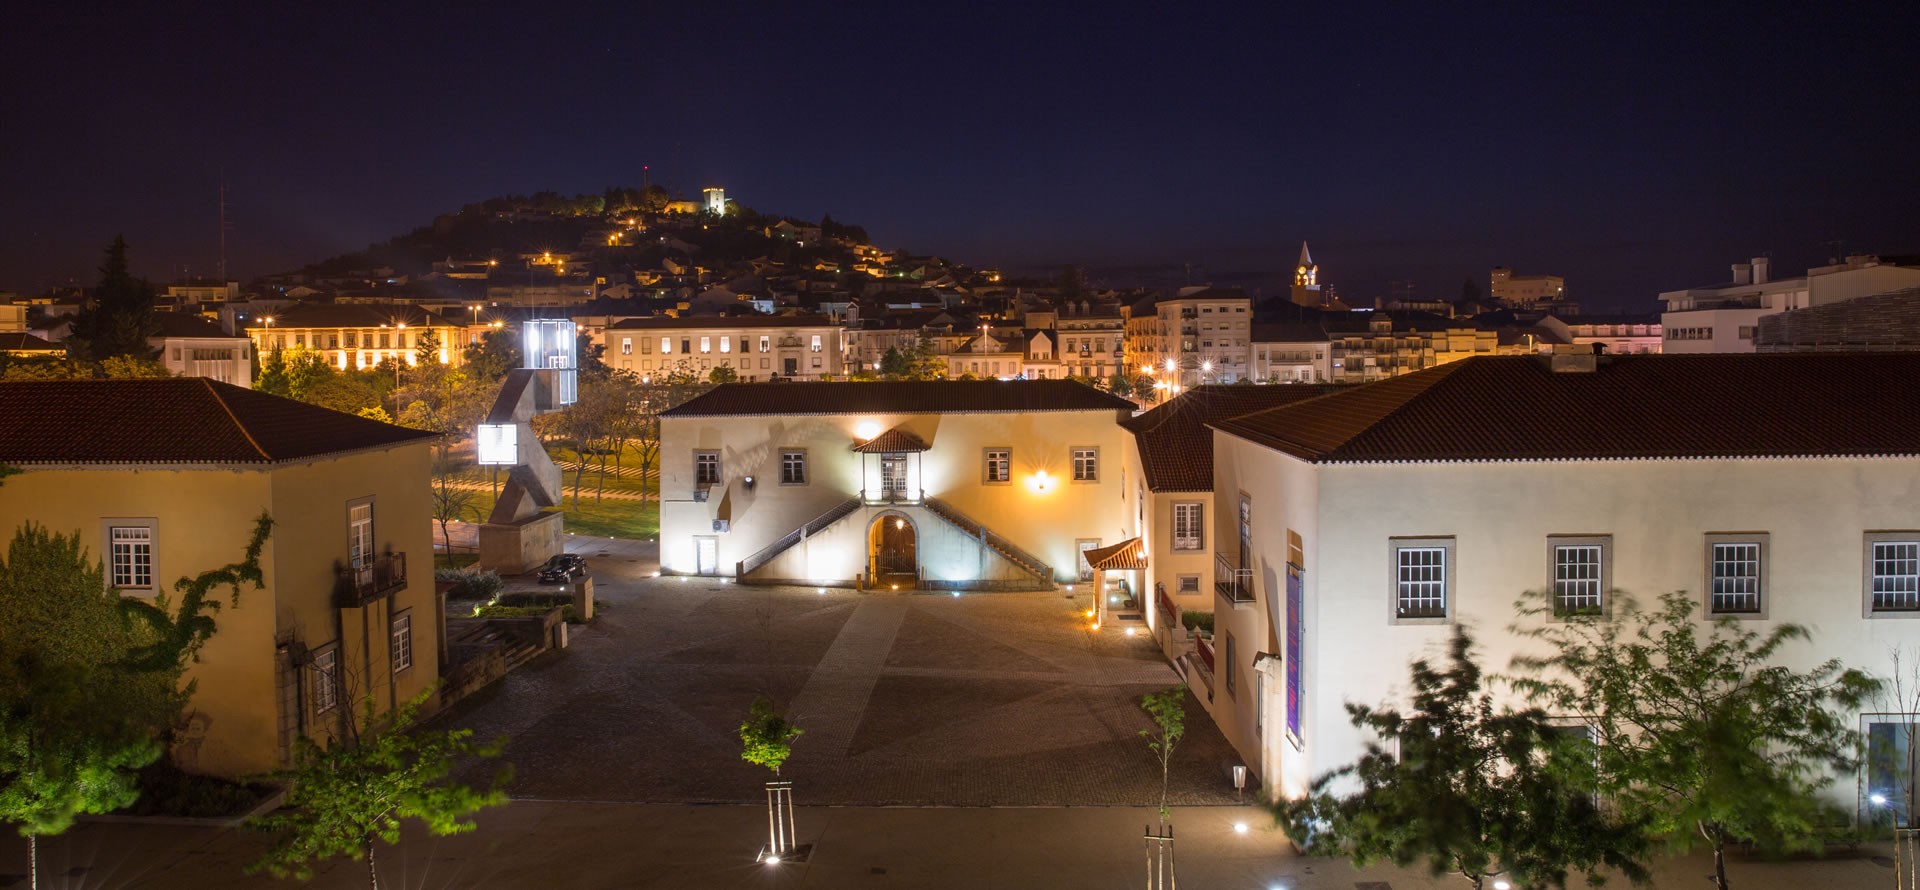 O centro de Castelo Branco, cidade do interior de Portugal